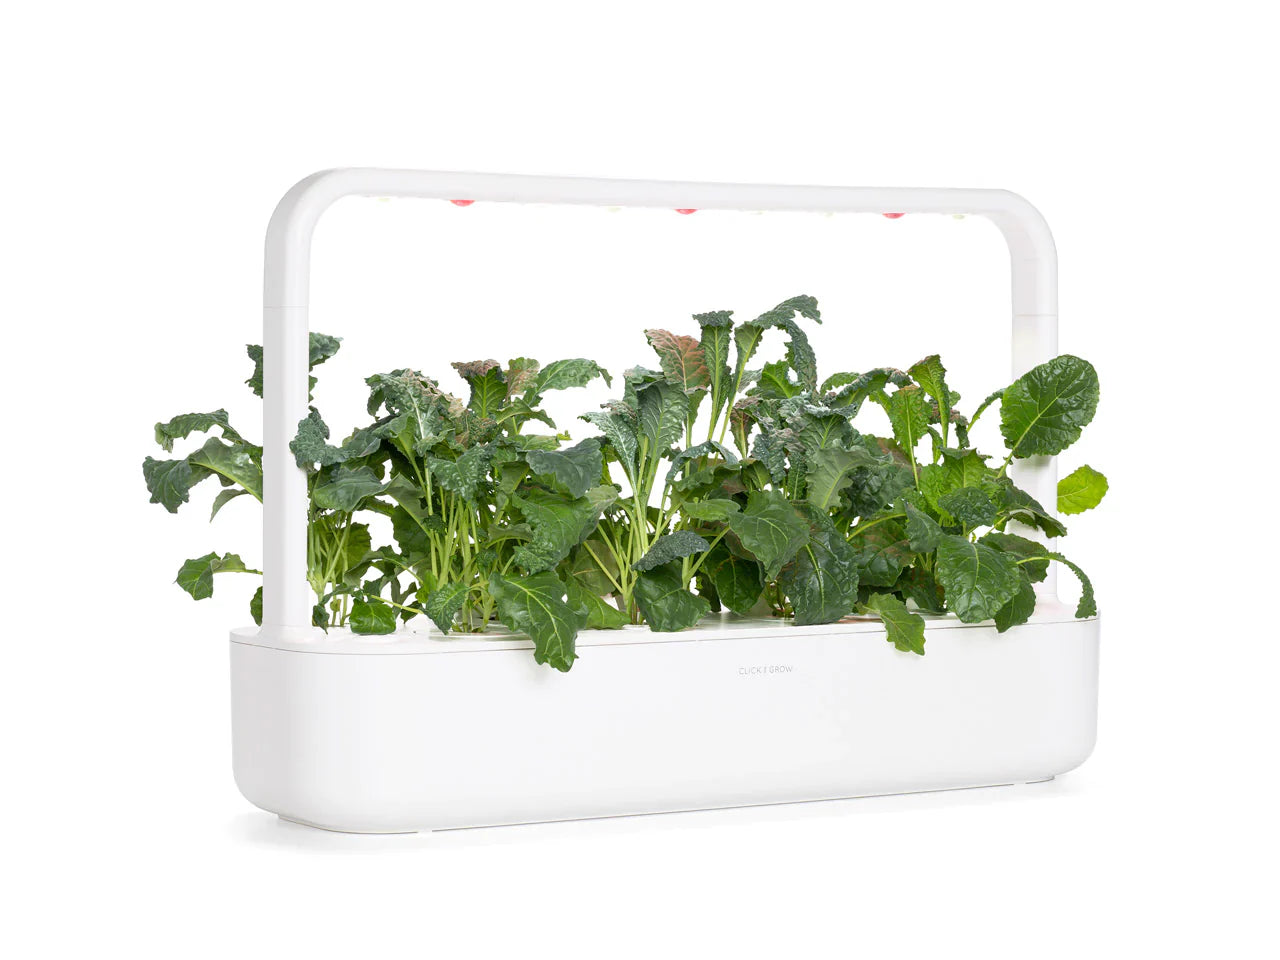 Click & Grow Smart Garden 9 with Italian Kale